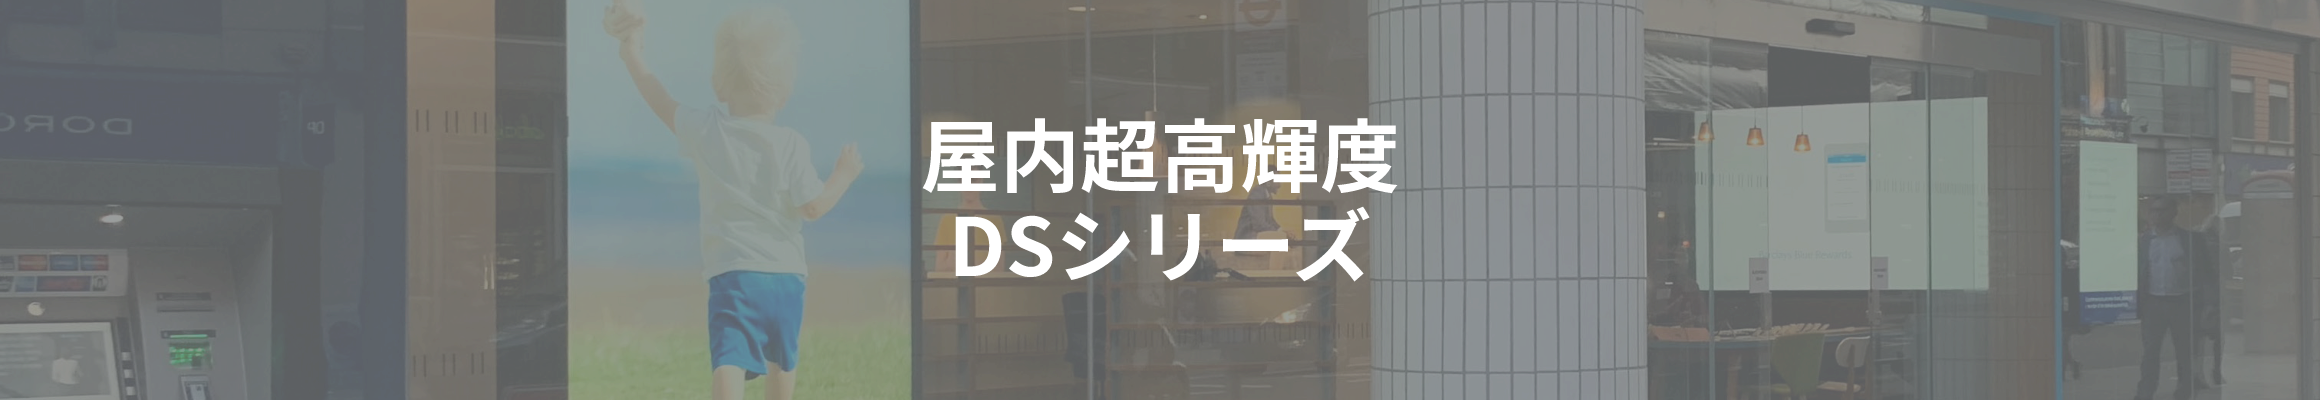 DSシリーズ